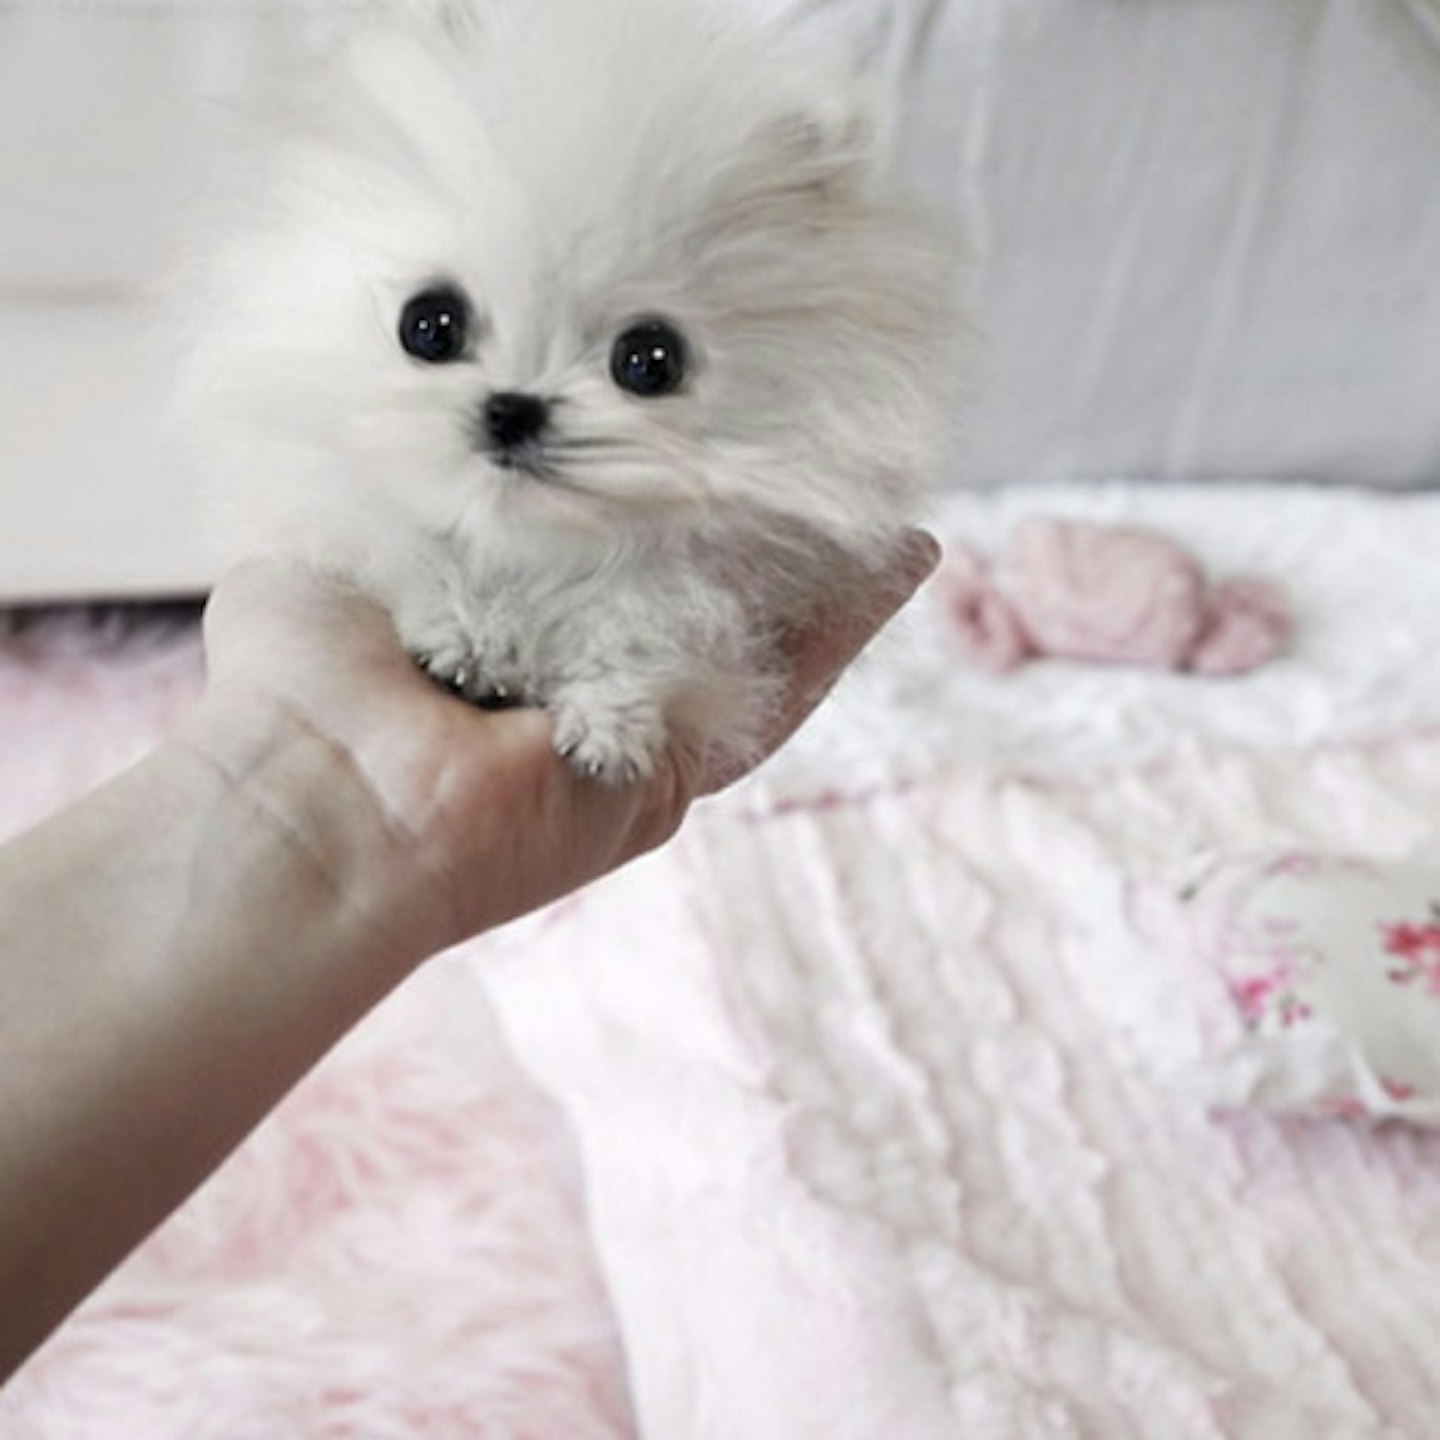 Paris spent around £8,000 on the adorable puppy